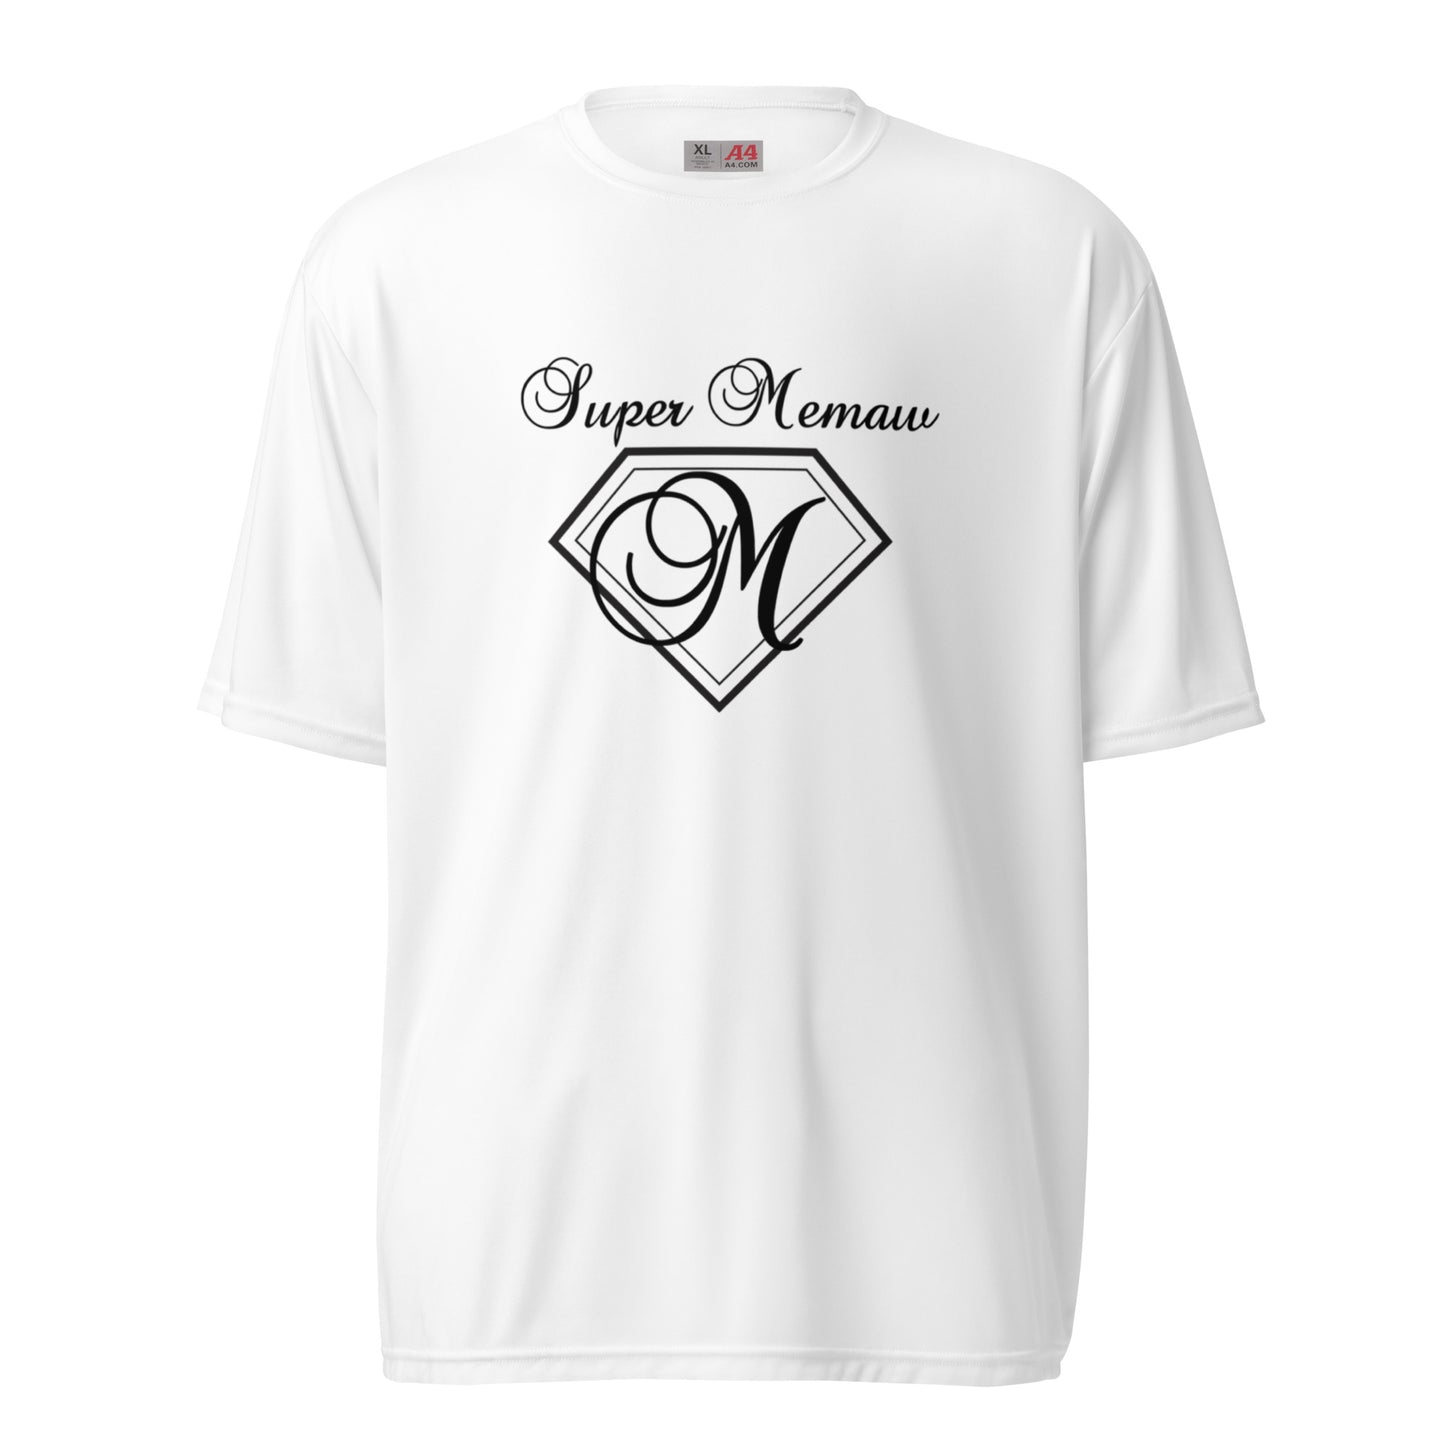 Super Memaw unisex performance crew neck t-shirt - Black Print